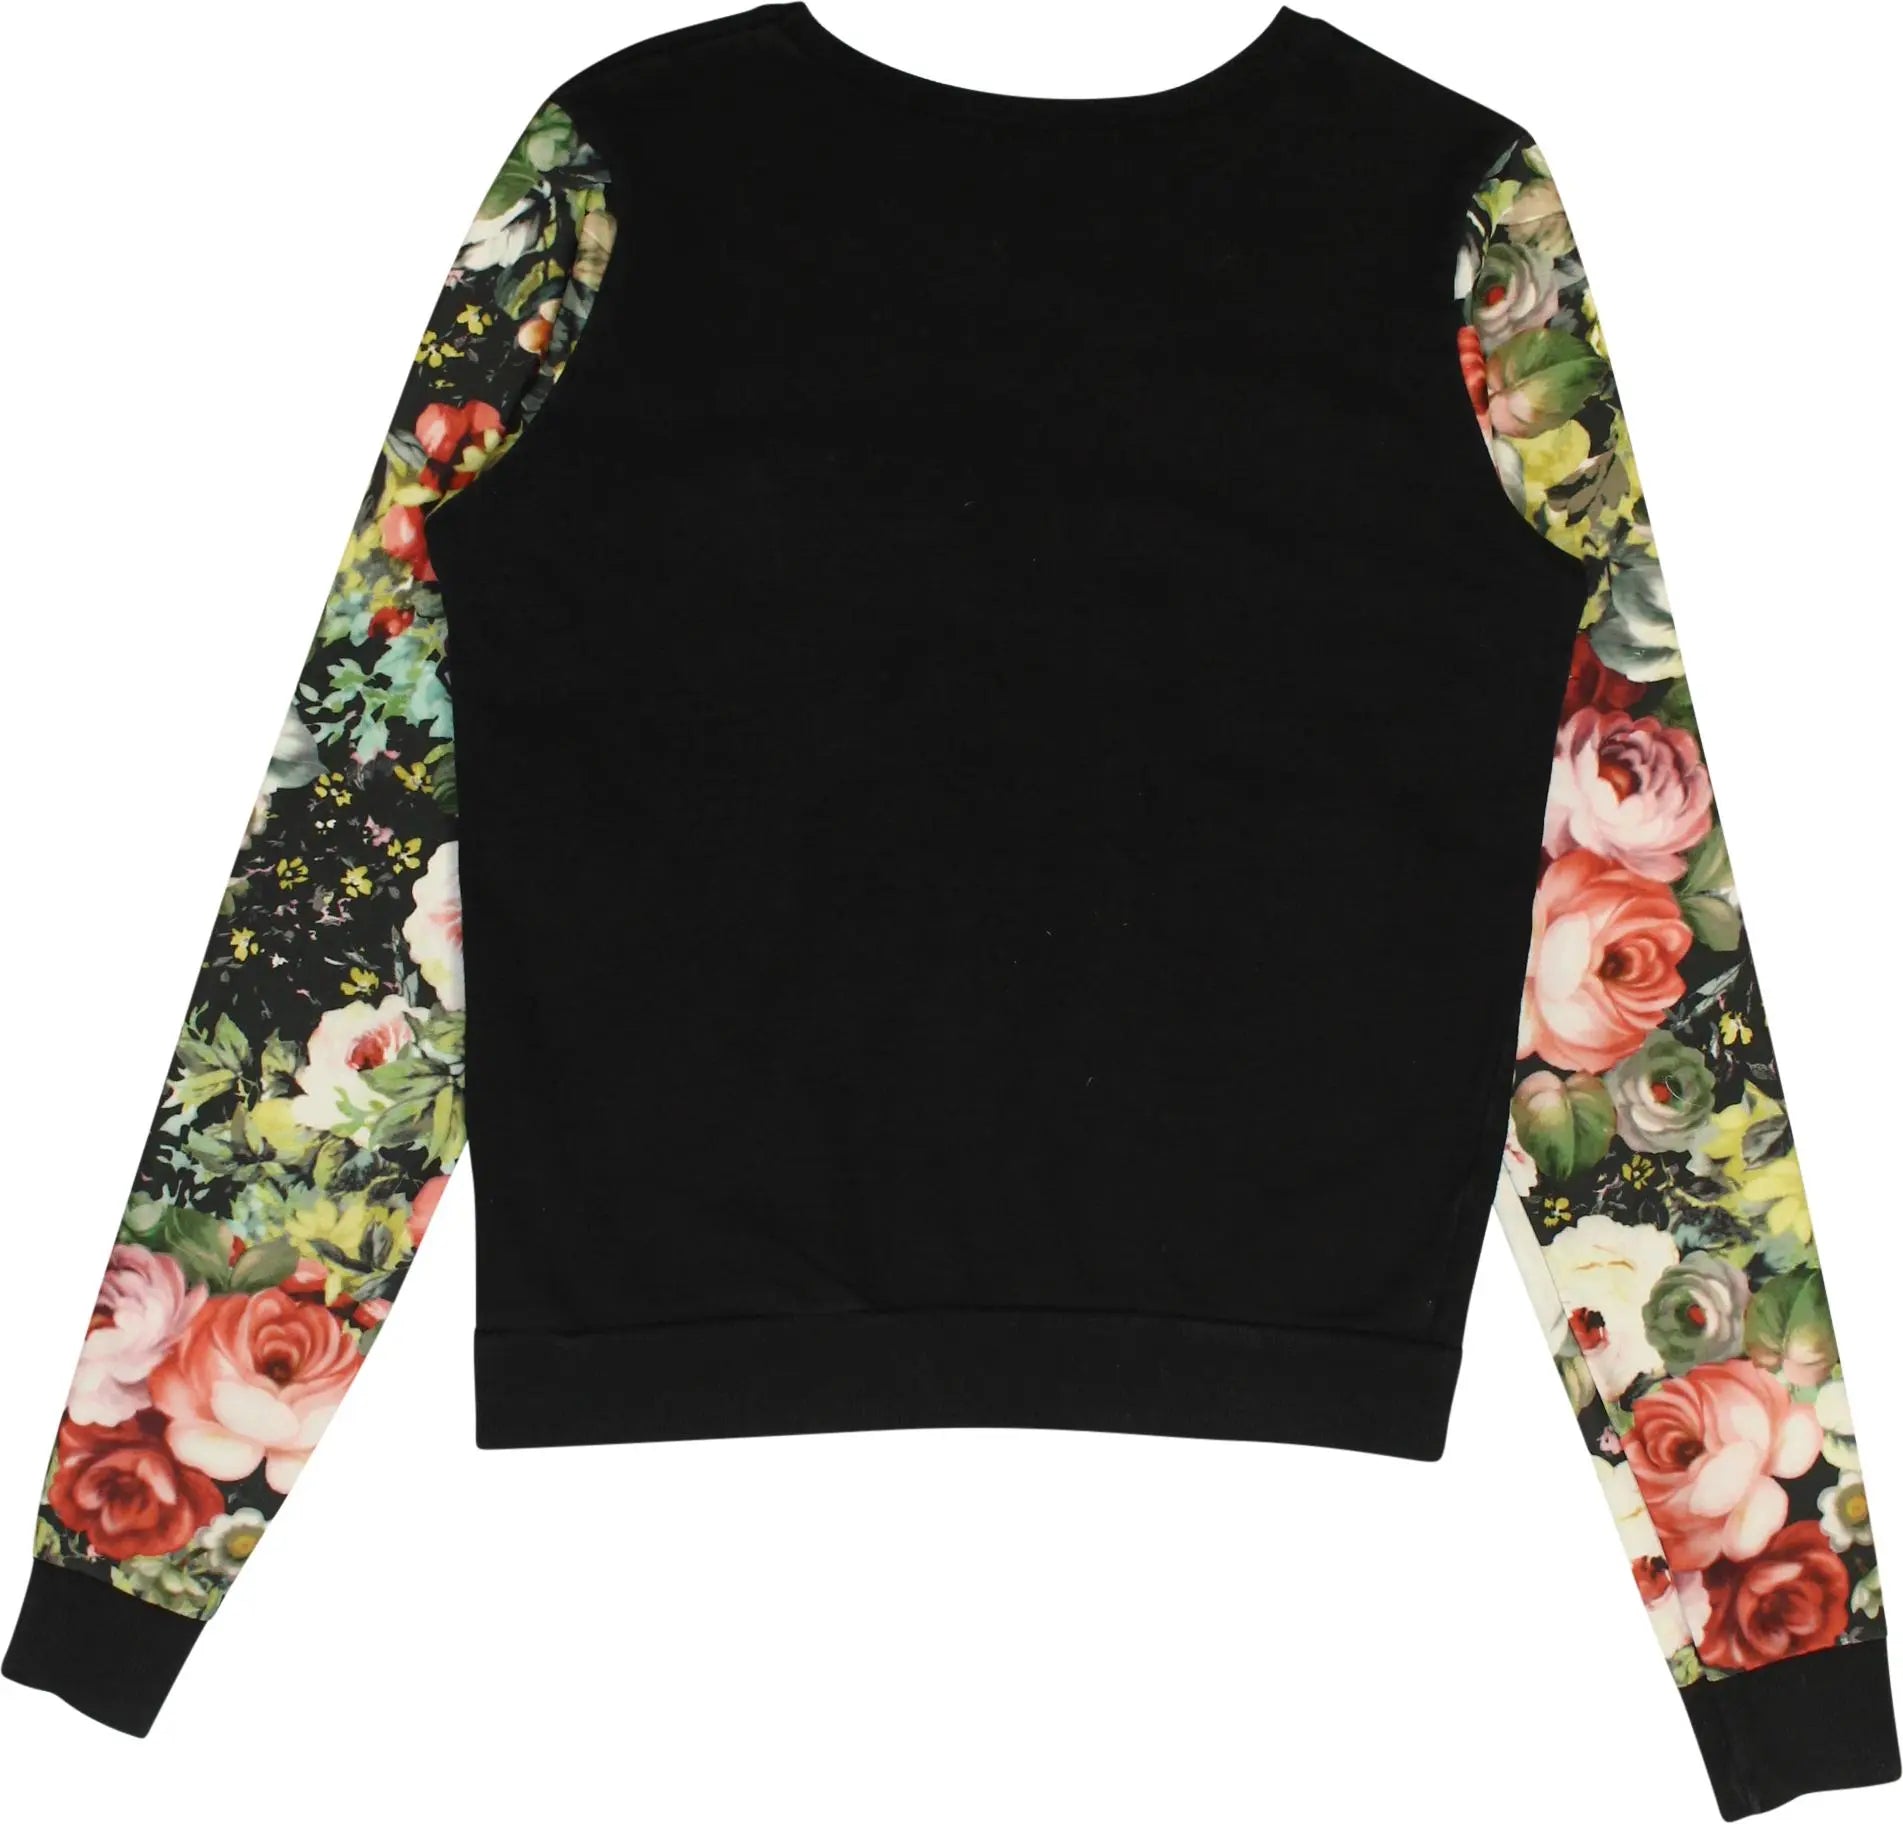 Primark - Black Sweatshirt- ThriftTale.com - Vintage and second handclothing